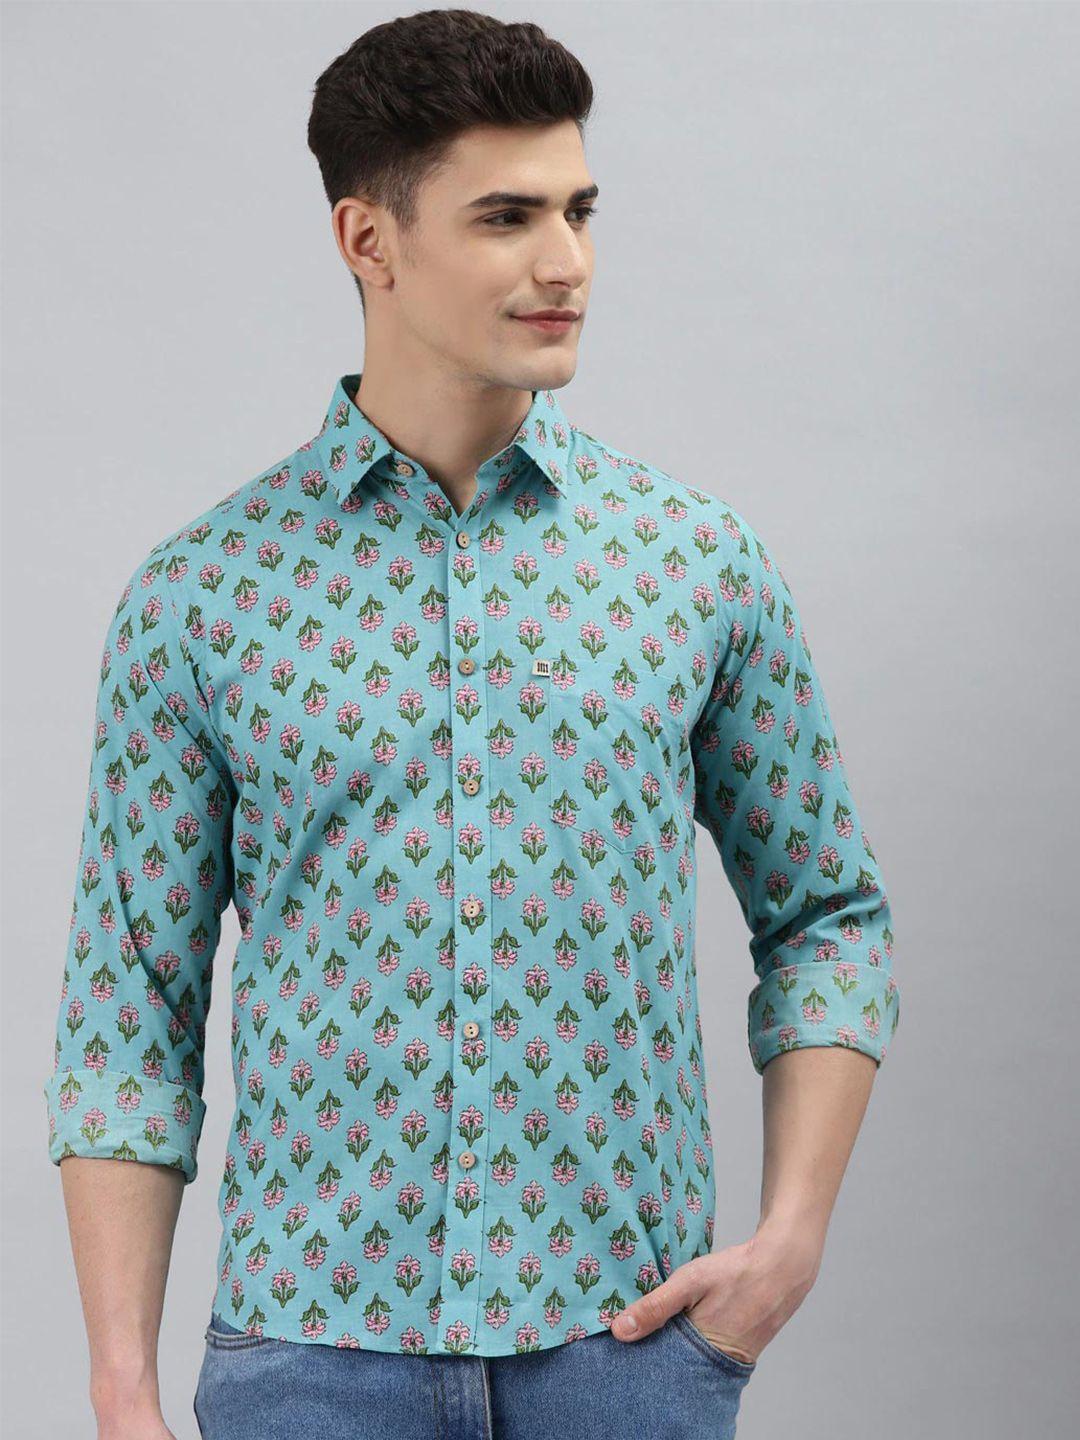 readiprint fashions men floral printed cotton casual shirt